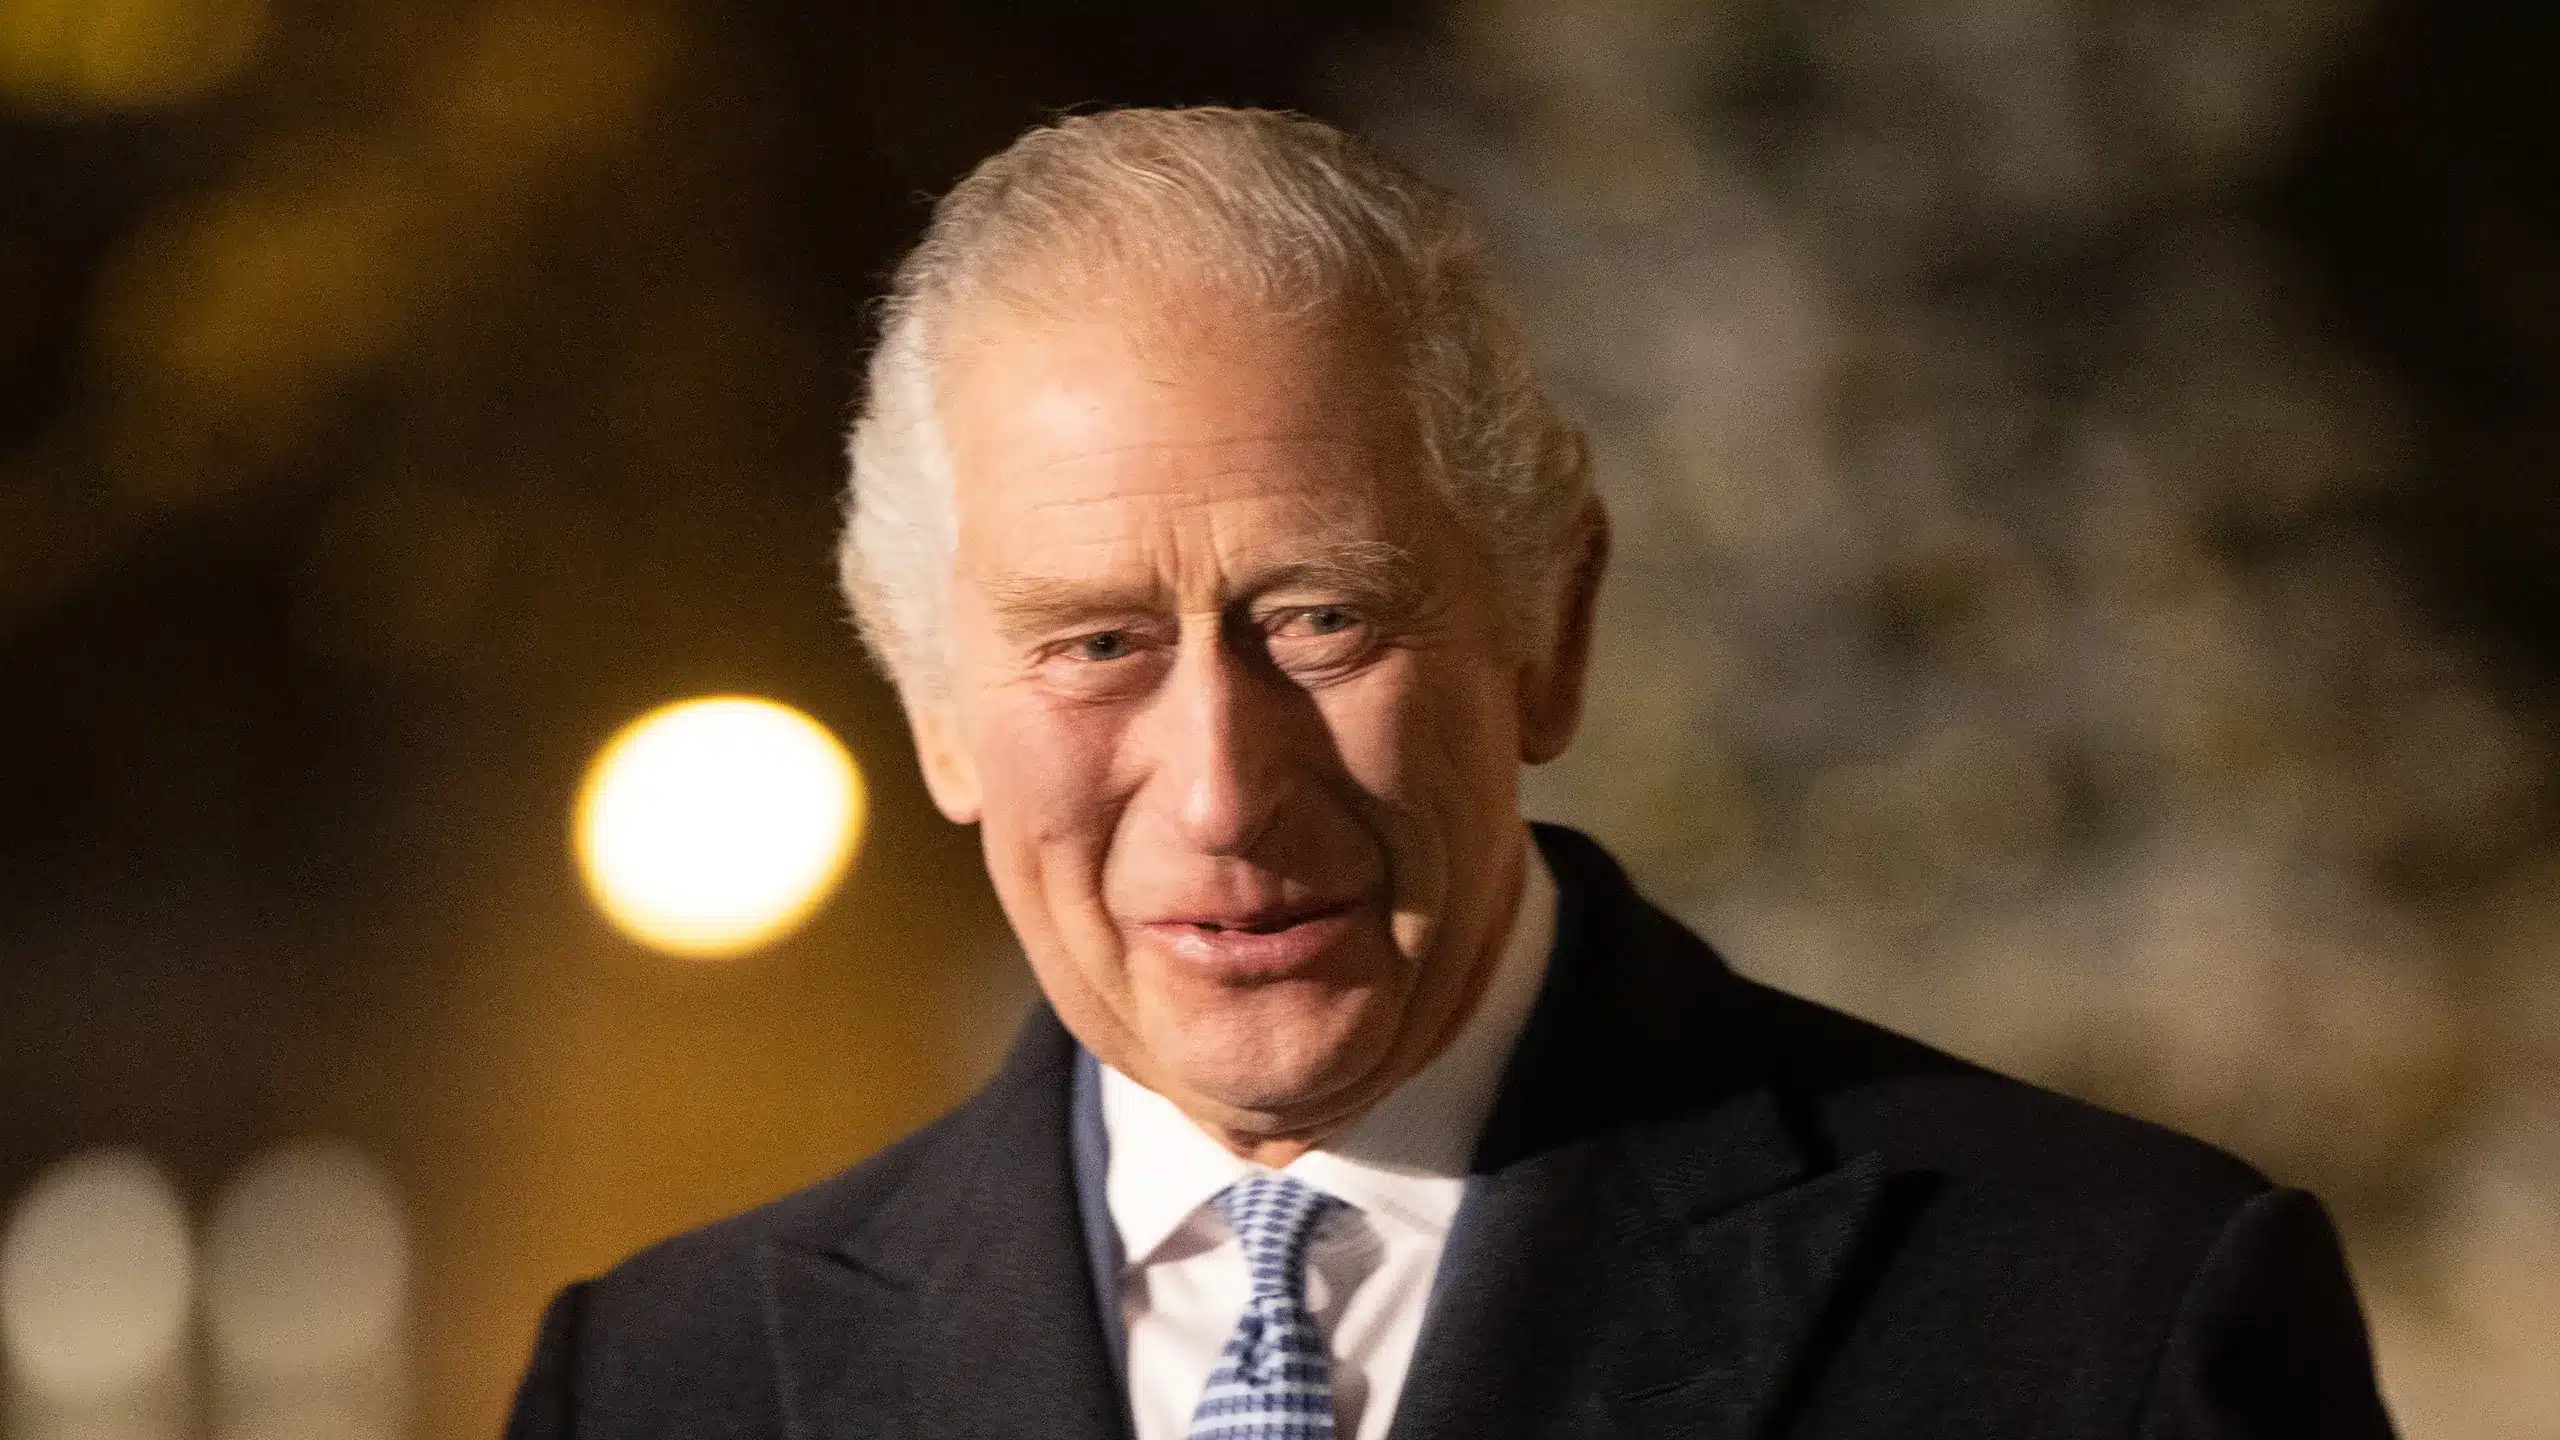 King Charles III Is Not Dead - Buckingham Palace